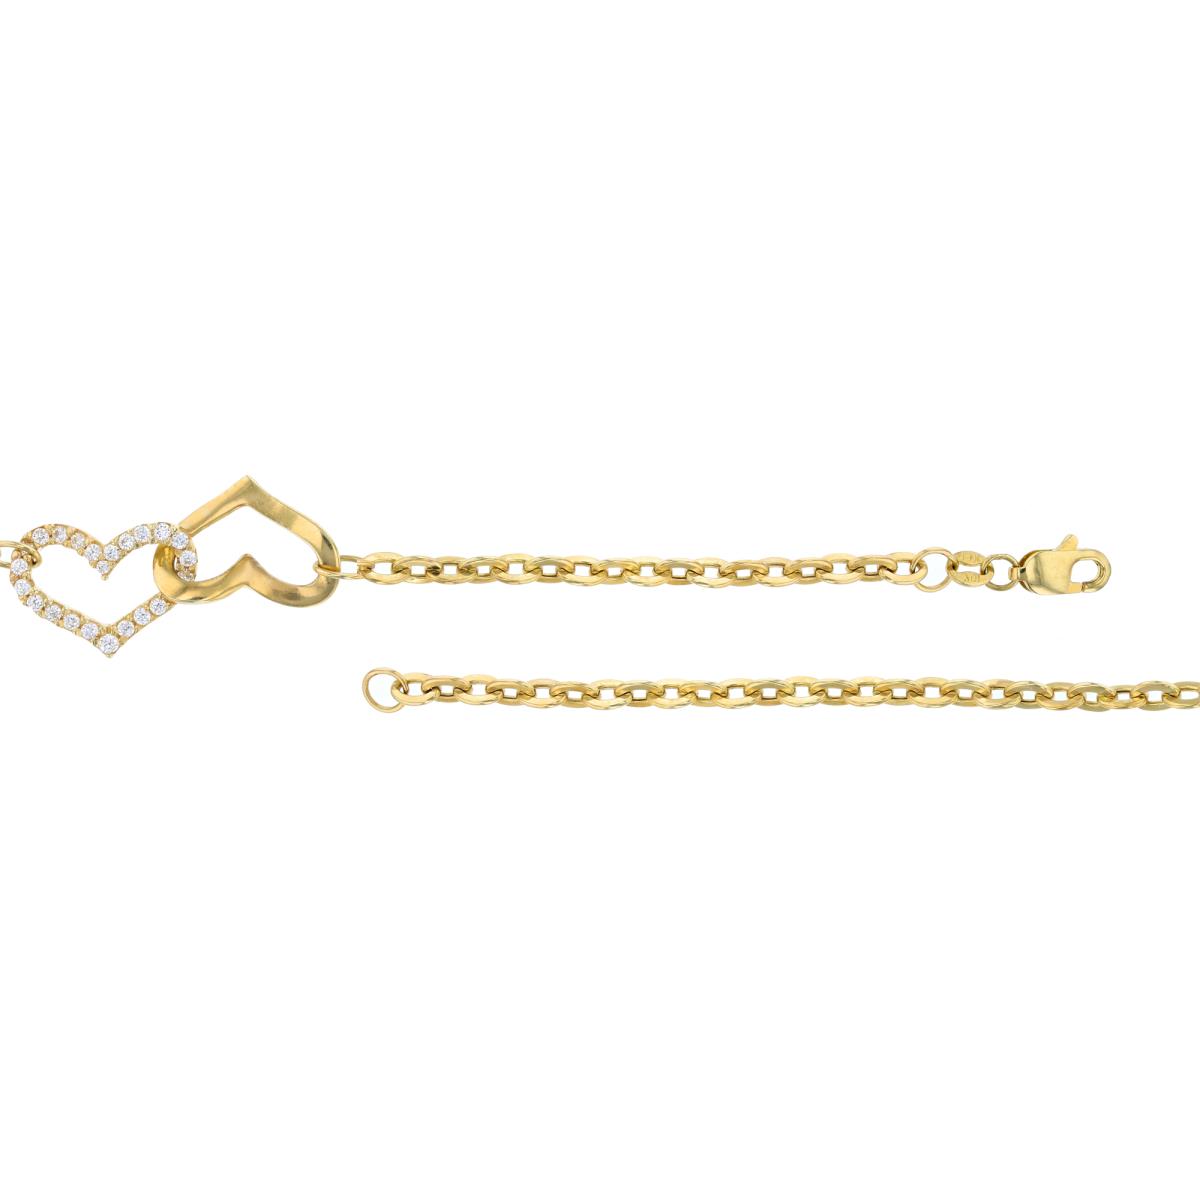 10K Yellow Gold Double Heart 7.5" Bracelet with Cubic Zirconia